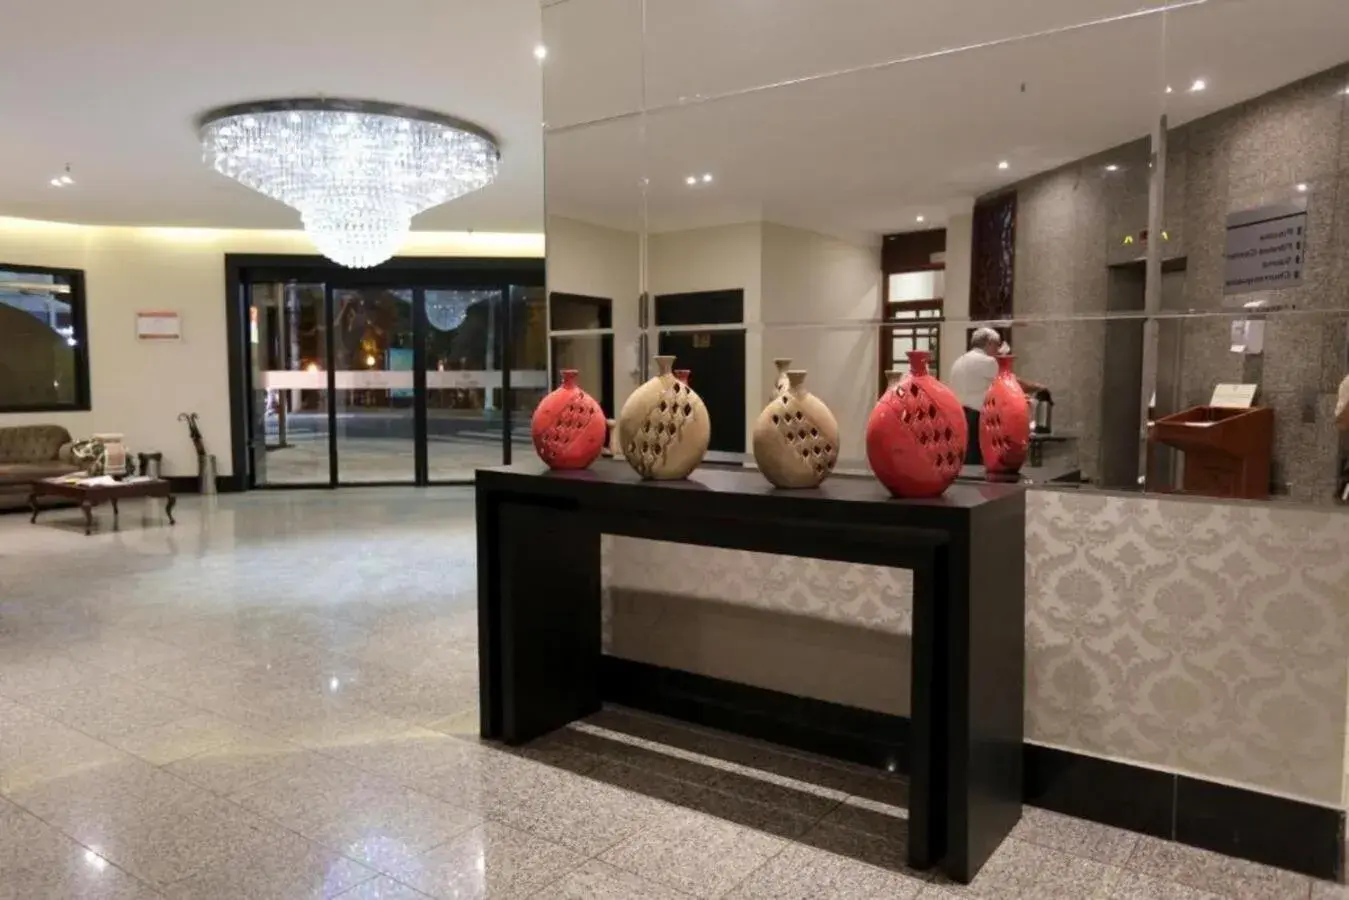 Lobby or reception in Taiwan Hotel